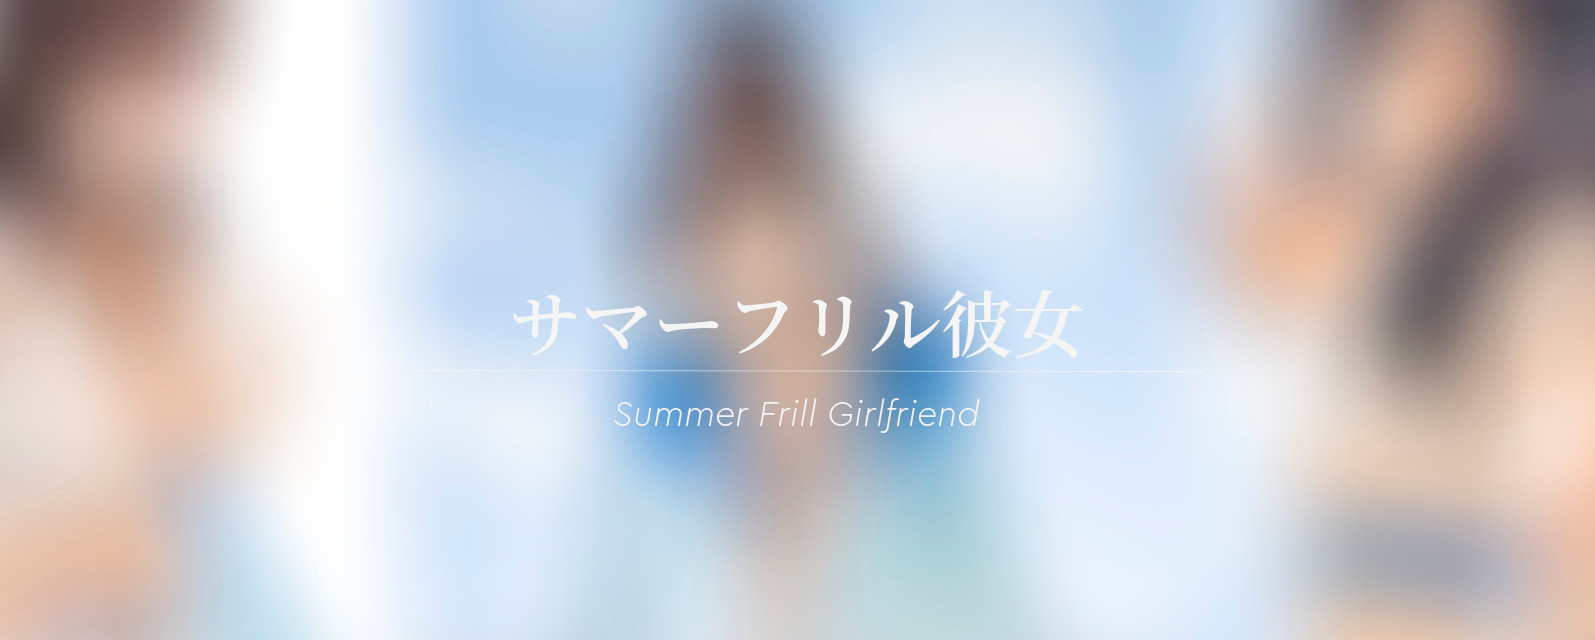 Yanyo Summer Frill Girlfriend by Pink･Cat